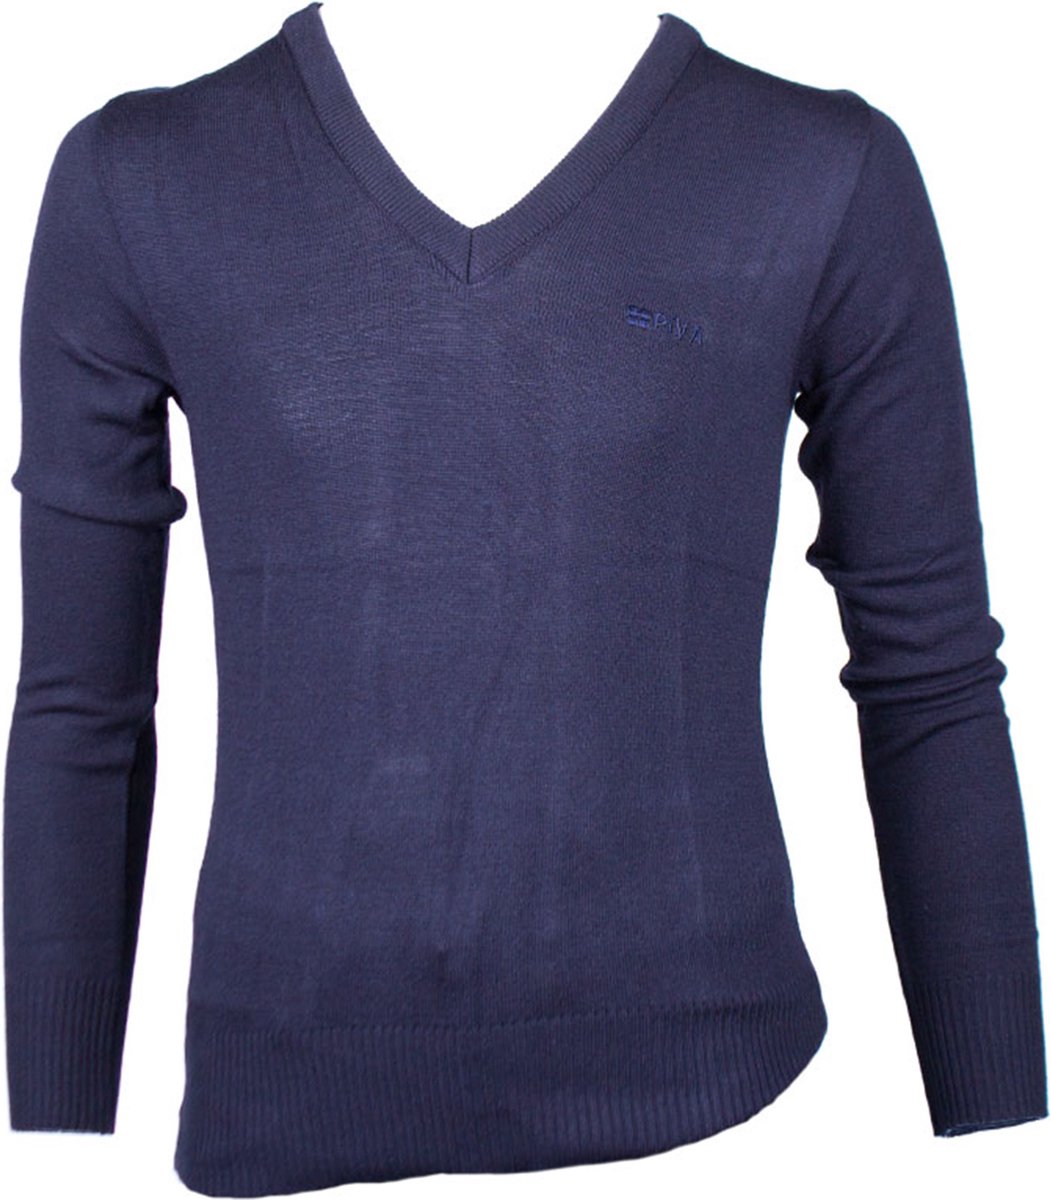 Piva schooluniform trui dames- donkerblauw - 32.45.07 - maat S